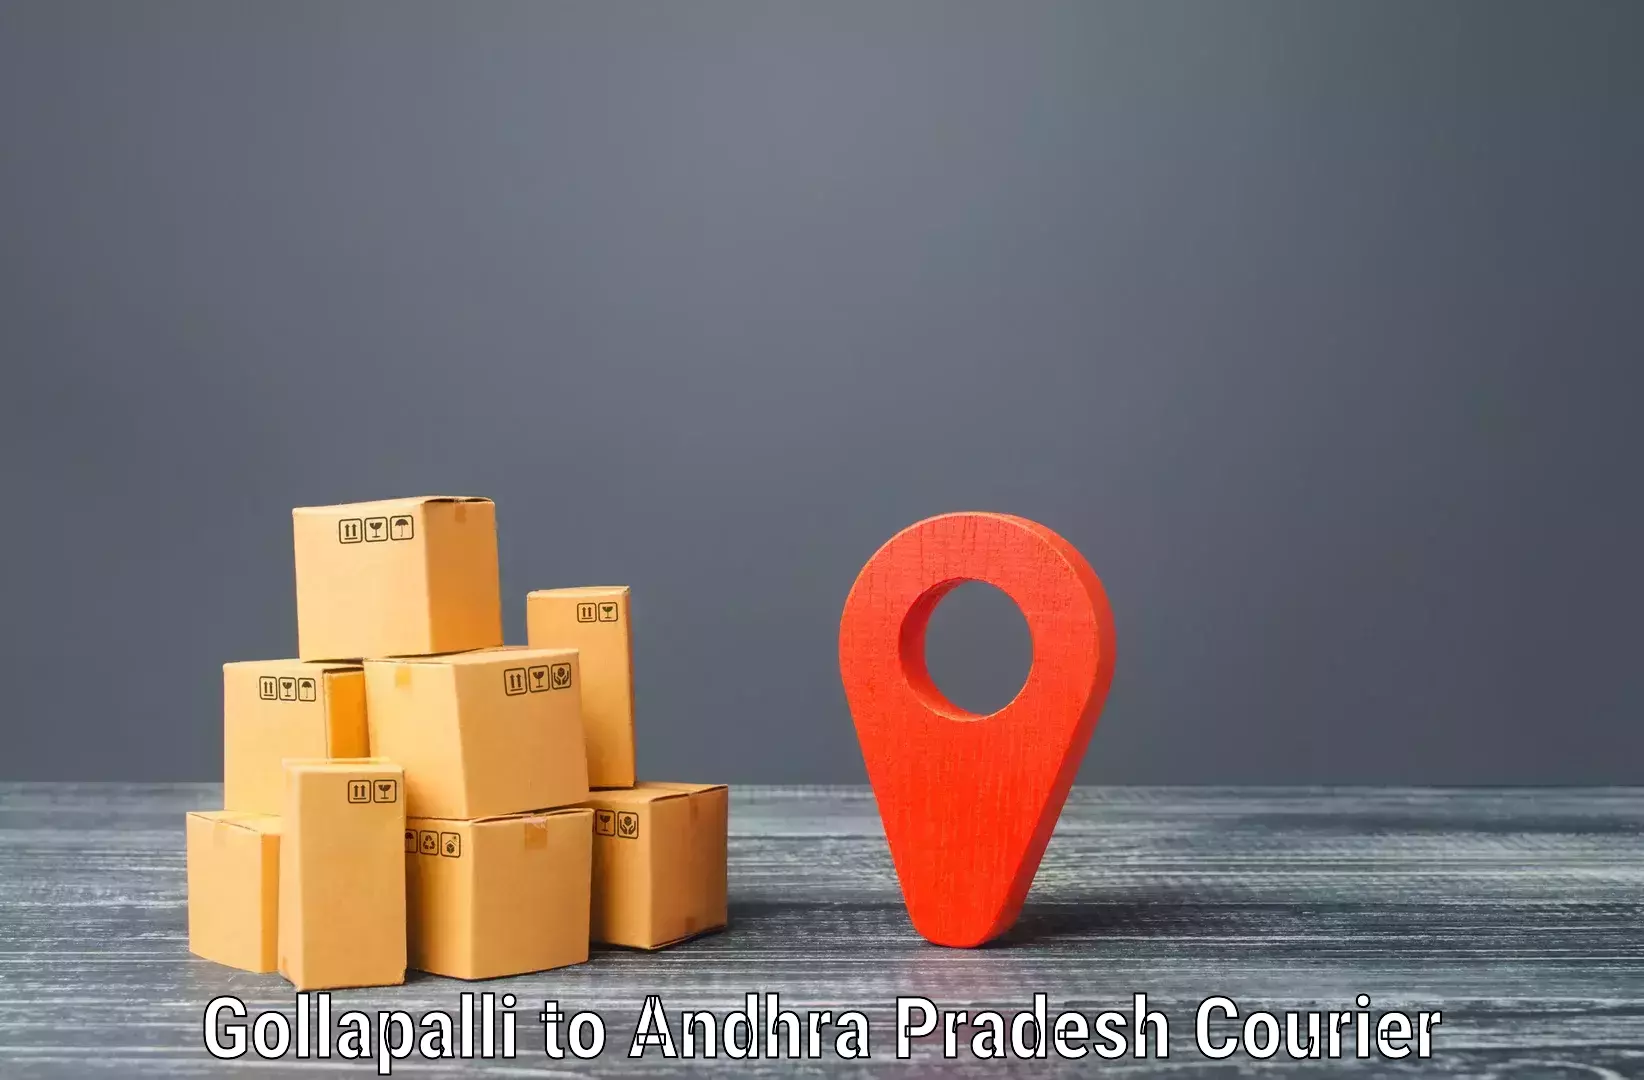 Courier service partnerships Gollapalli to Ganapavaram